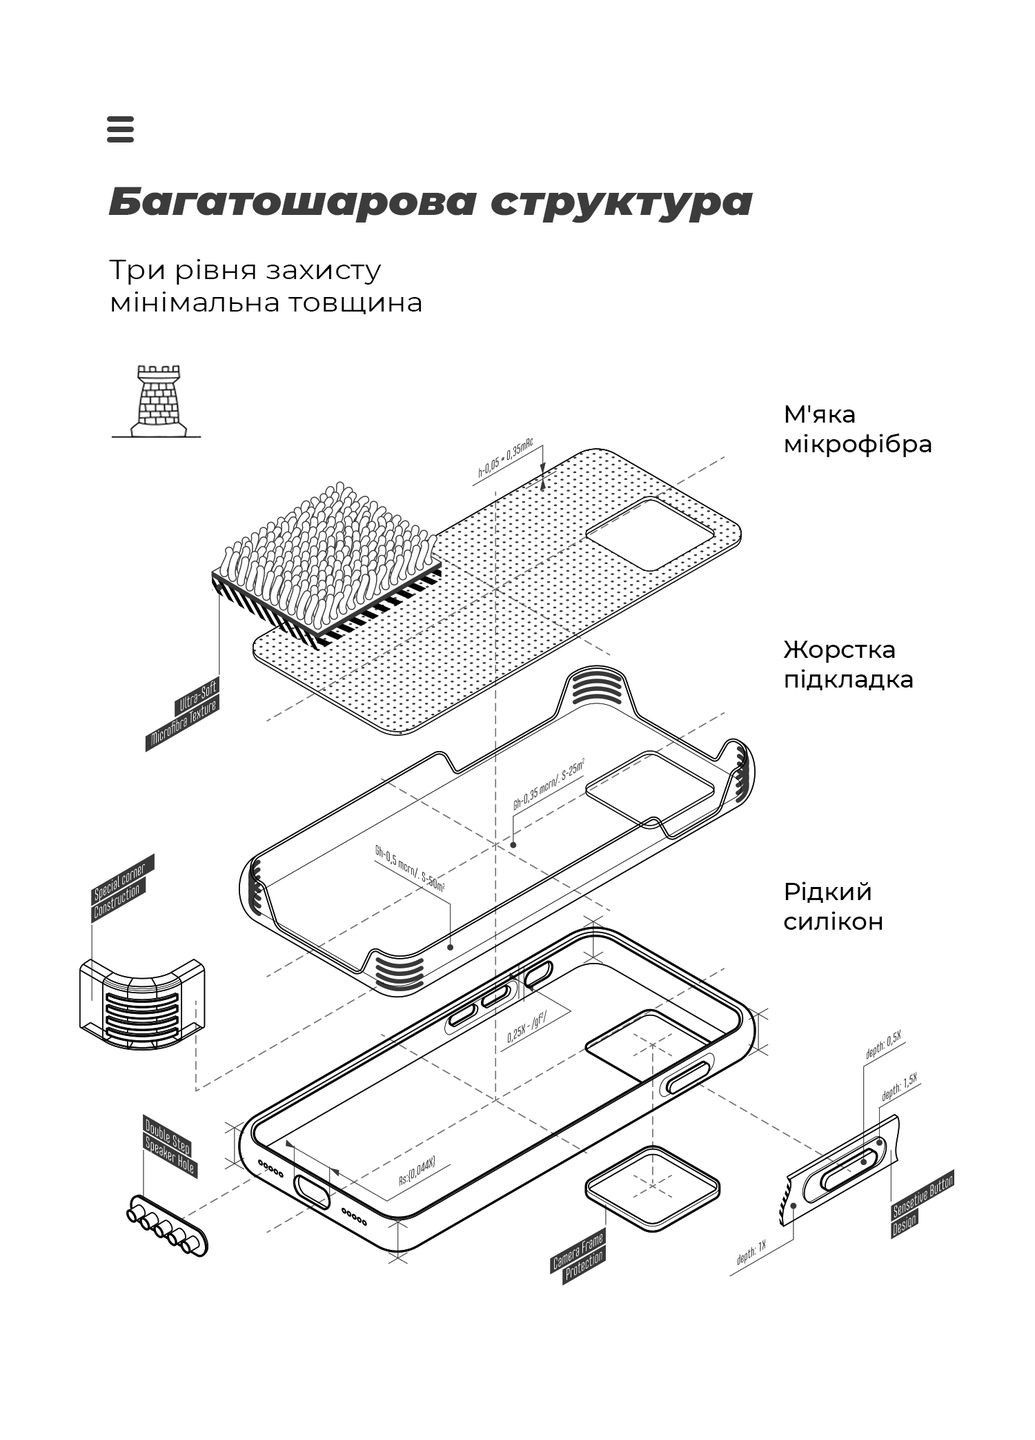 Панель ICON Case для Xiaomi Poco M6 Pro 4G Lavender (ARM74150) ArmorStandart (289361625)